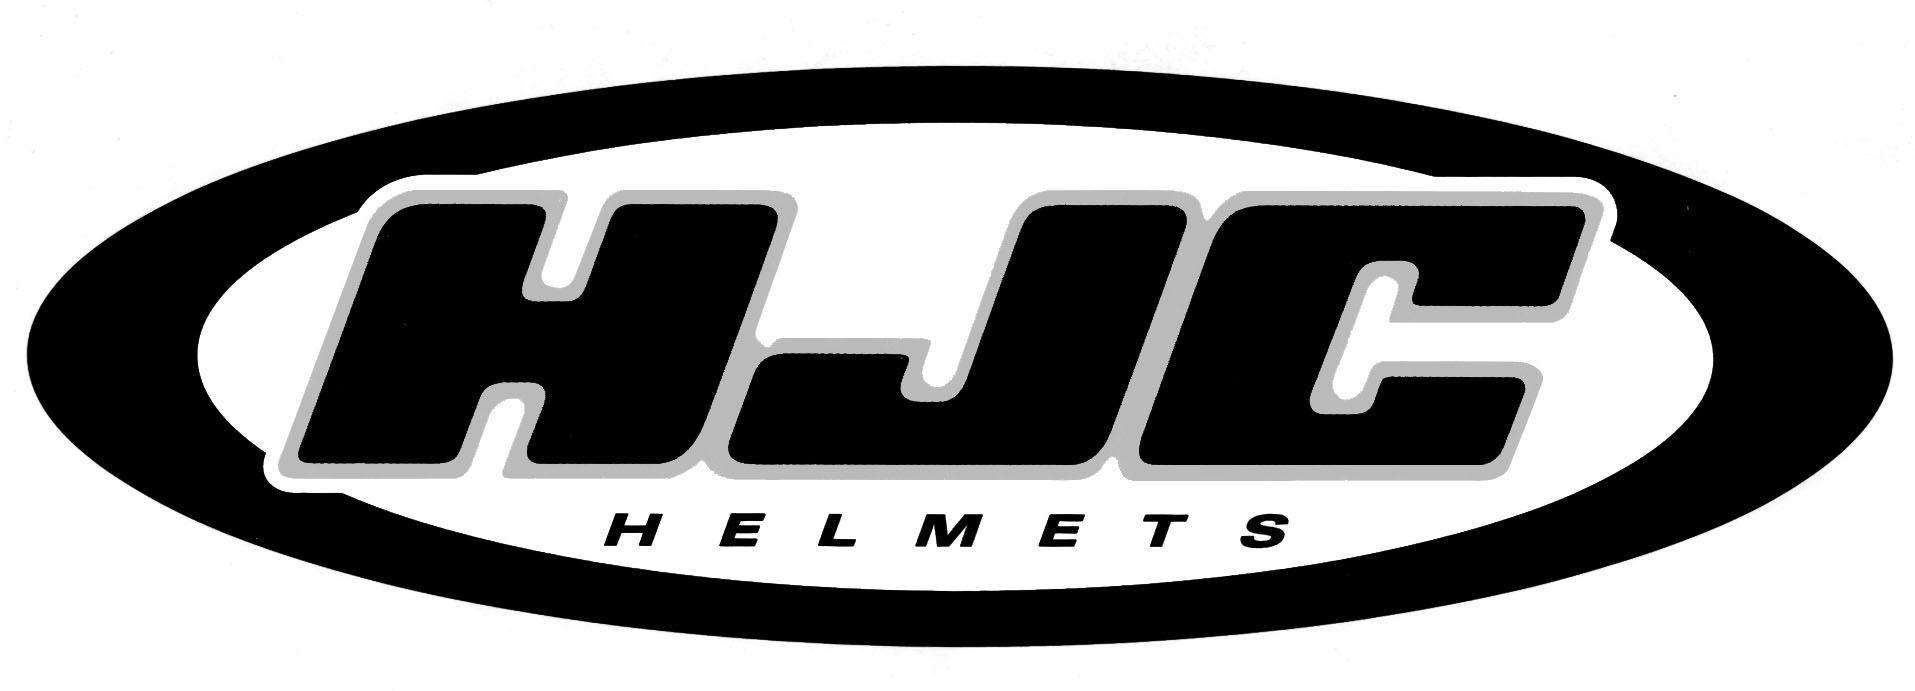 Helmets Logo - hjc helmet logo - Google Search | iD3 Helmets | Hjc helmets, Helmet ...